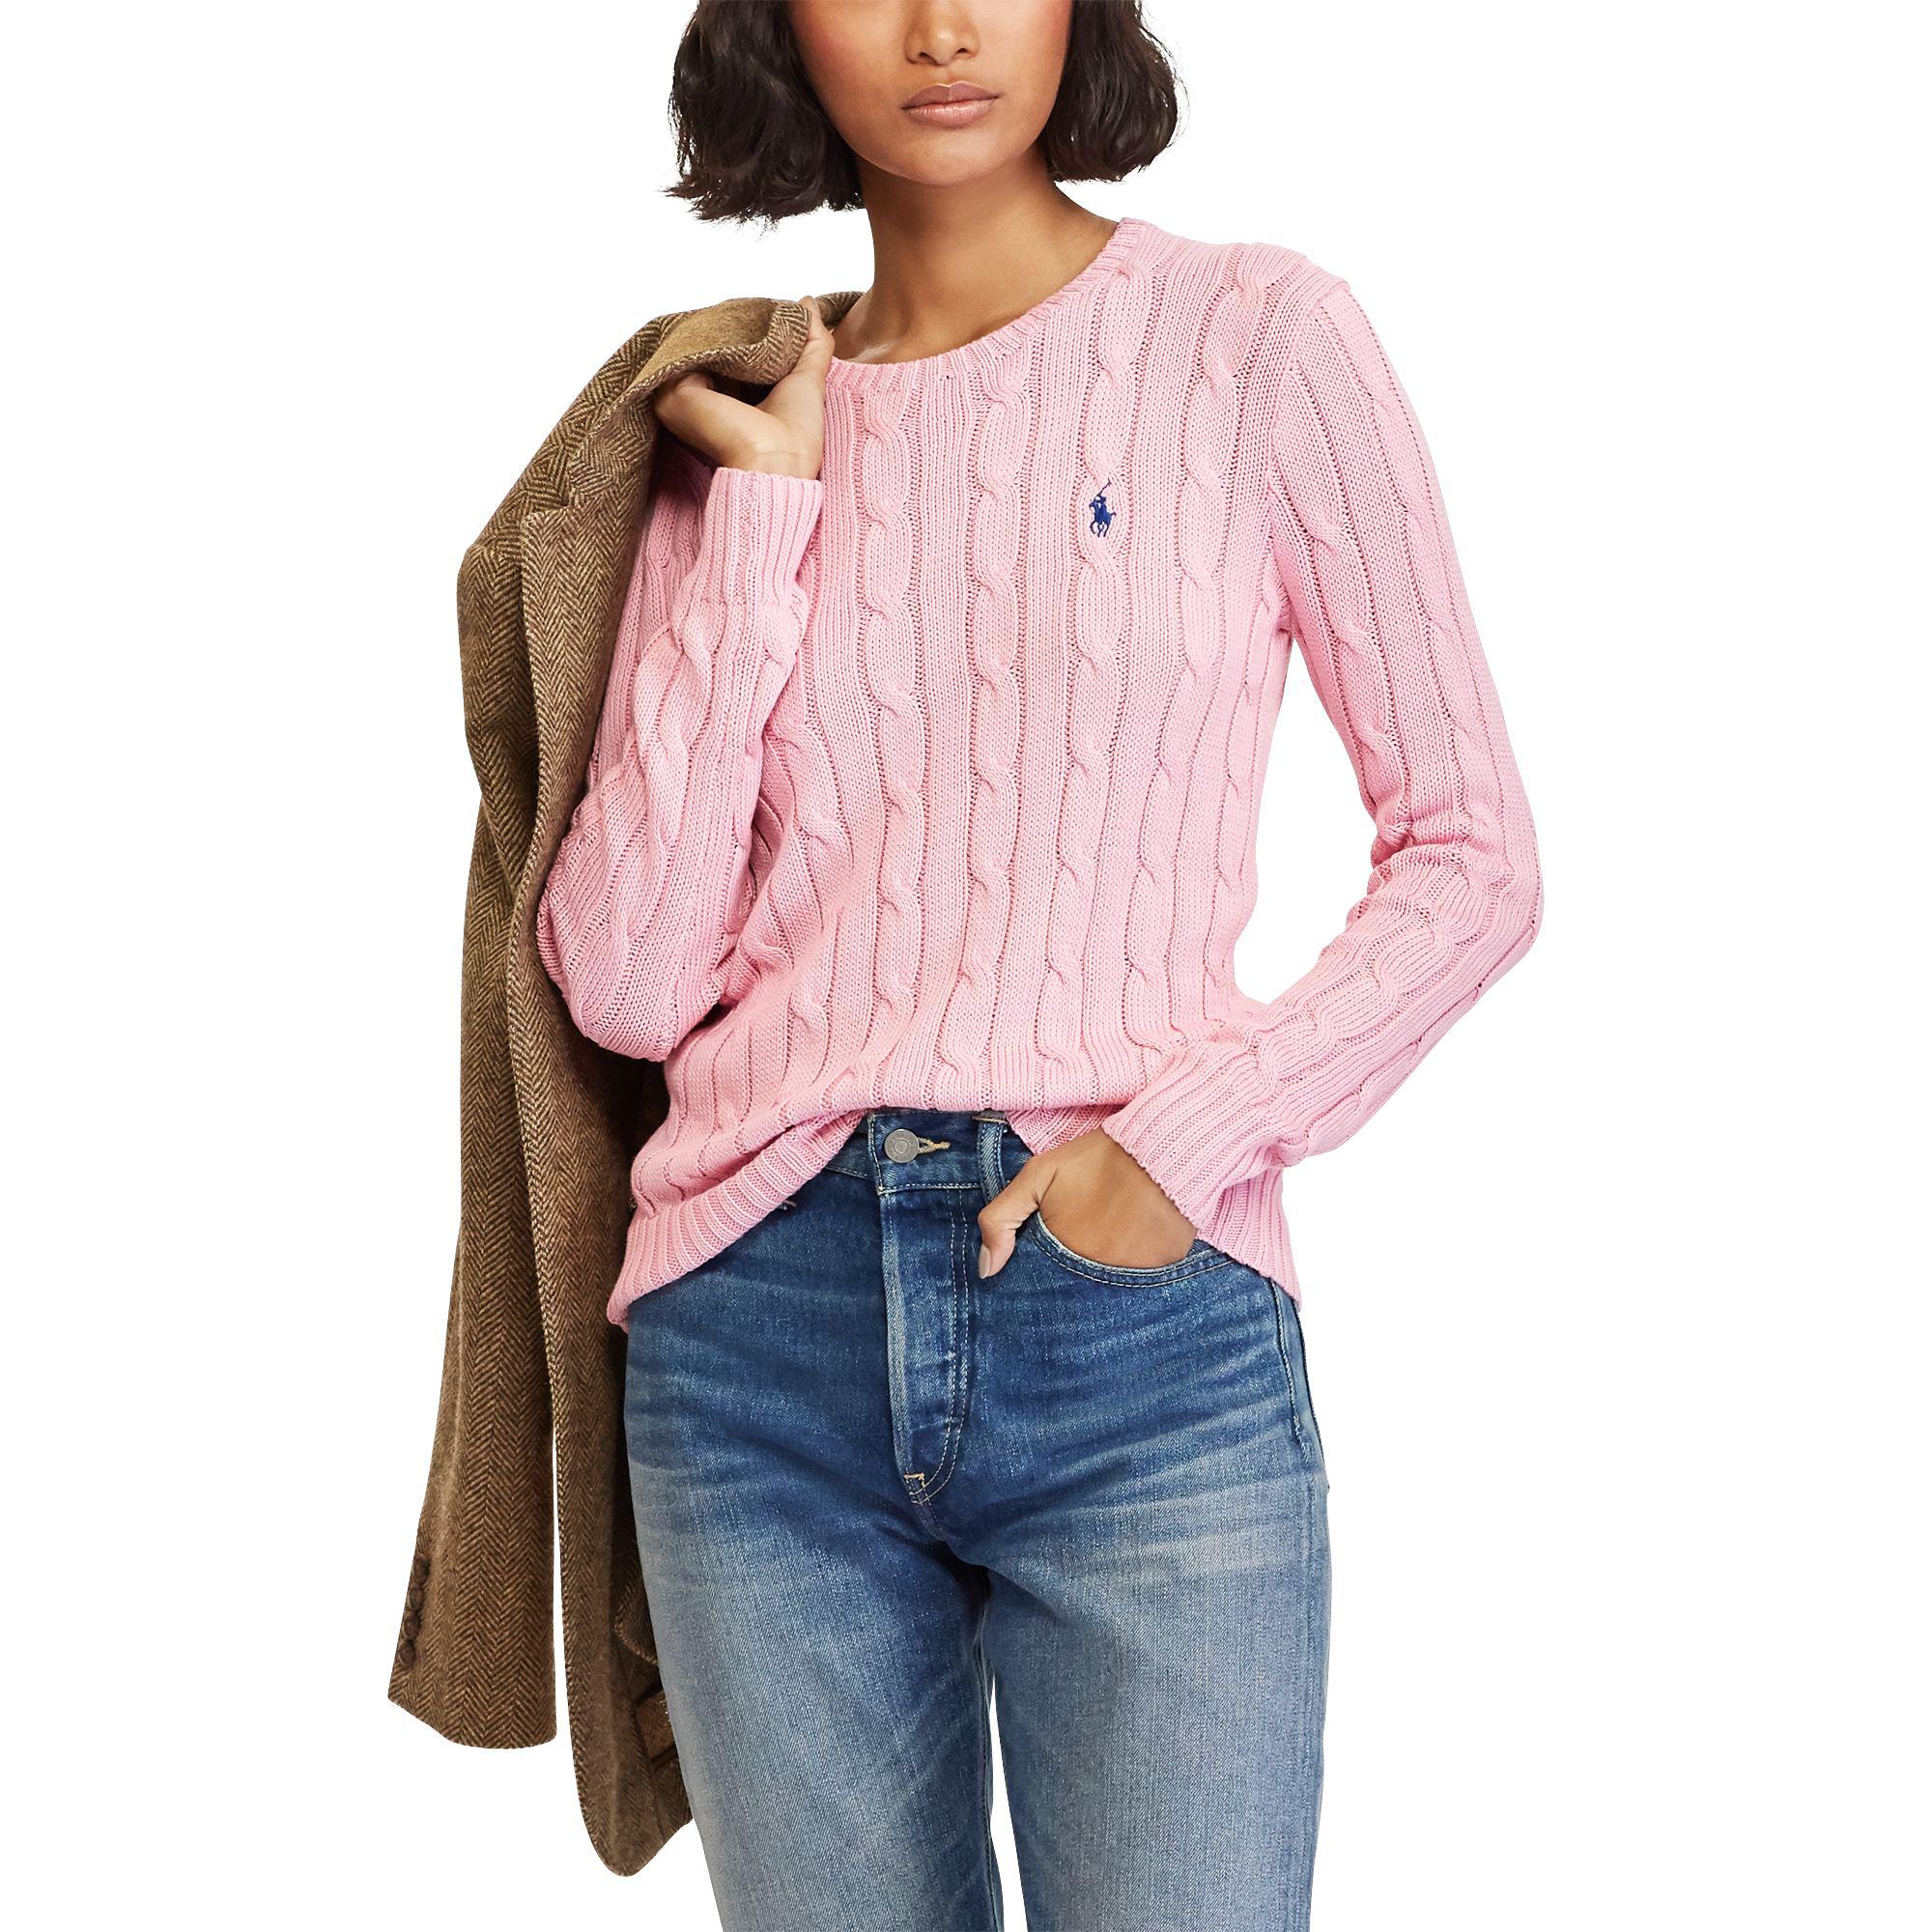 Introducir 63+ imagen polo ralph lauren cotton cable sweater ...